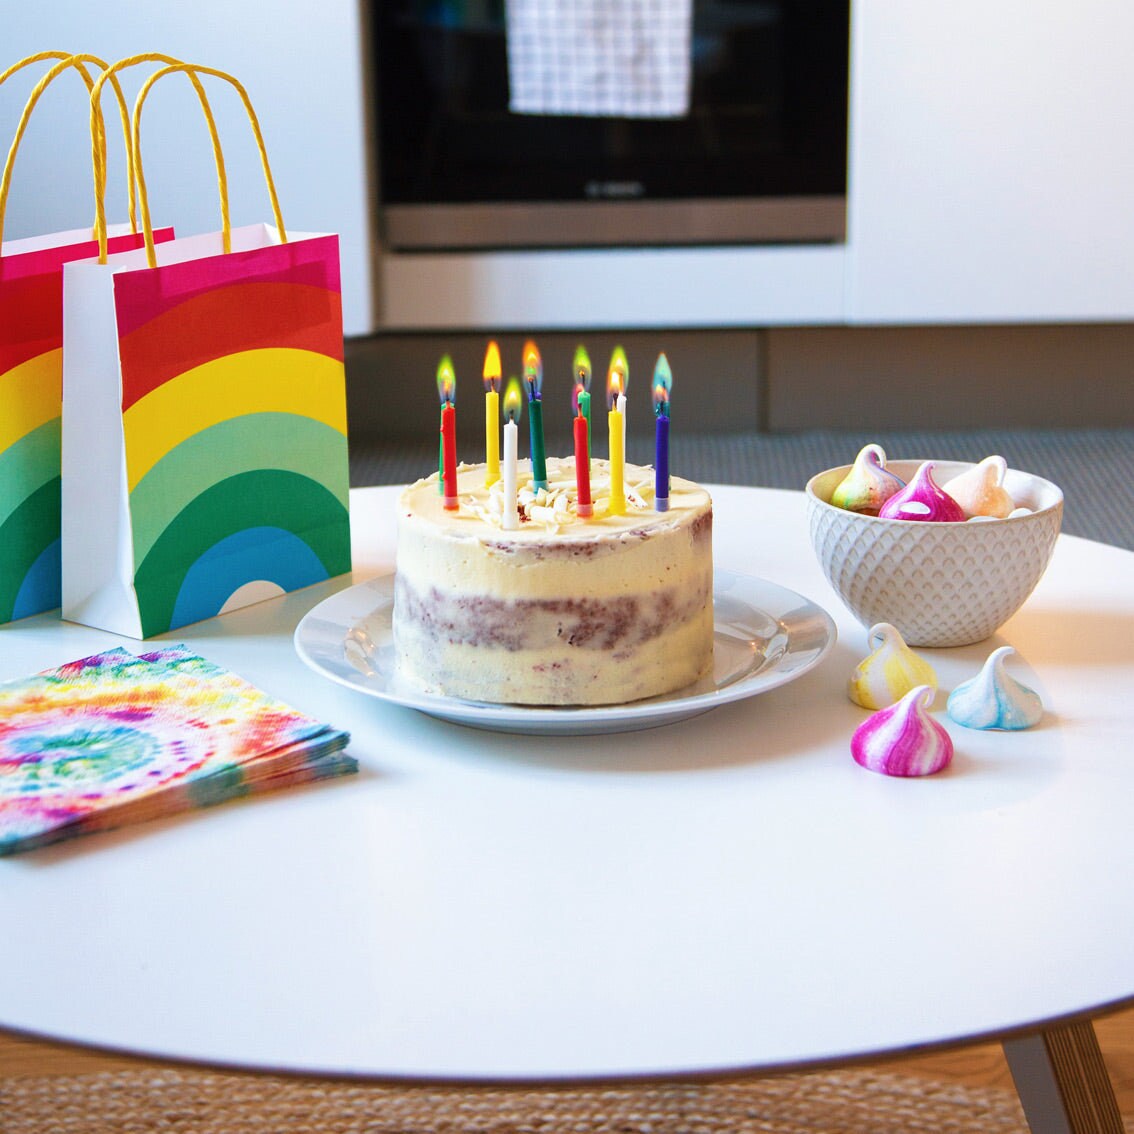 Bee Party Decorations - Stesha Party - 1st birthday girl, birthday,  birthday girl